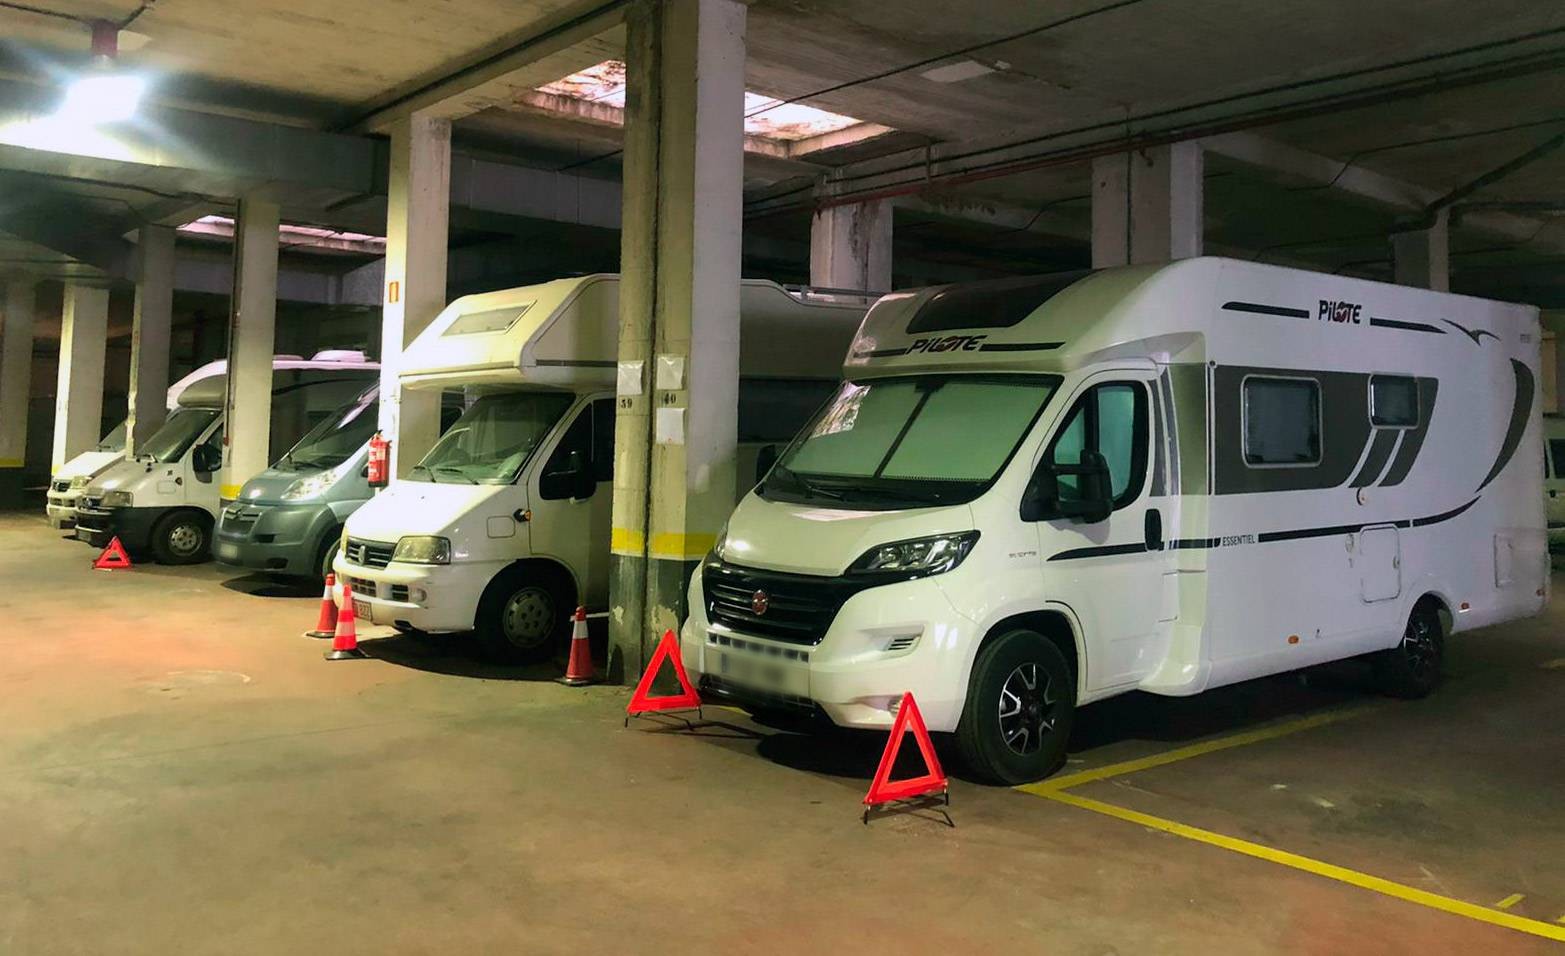 Parking de auto caravanas. Caravana Parking - 74 plazas cubiertas